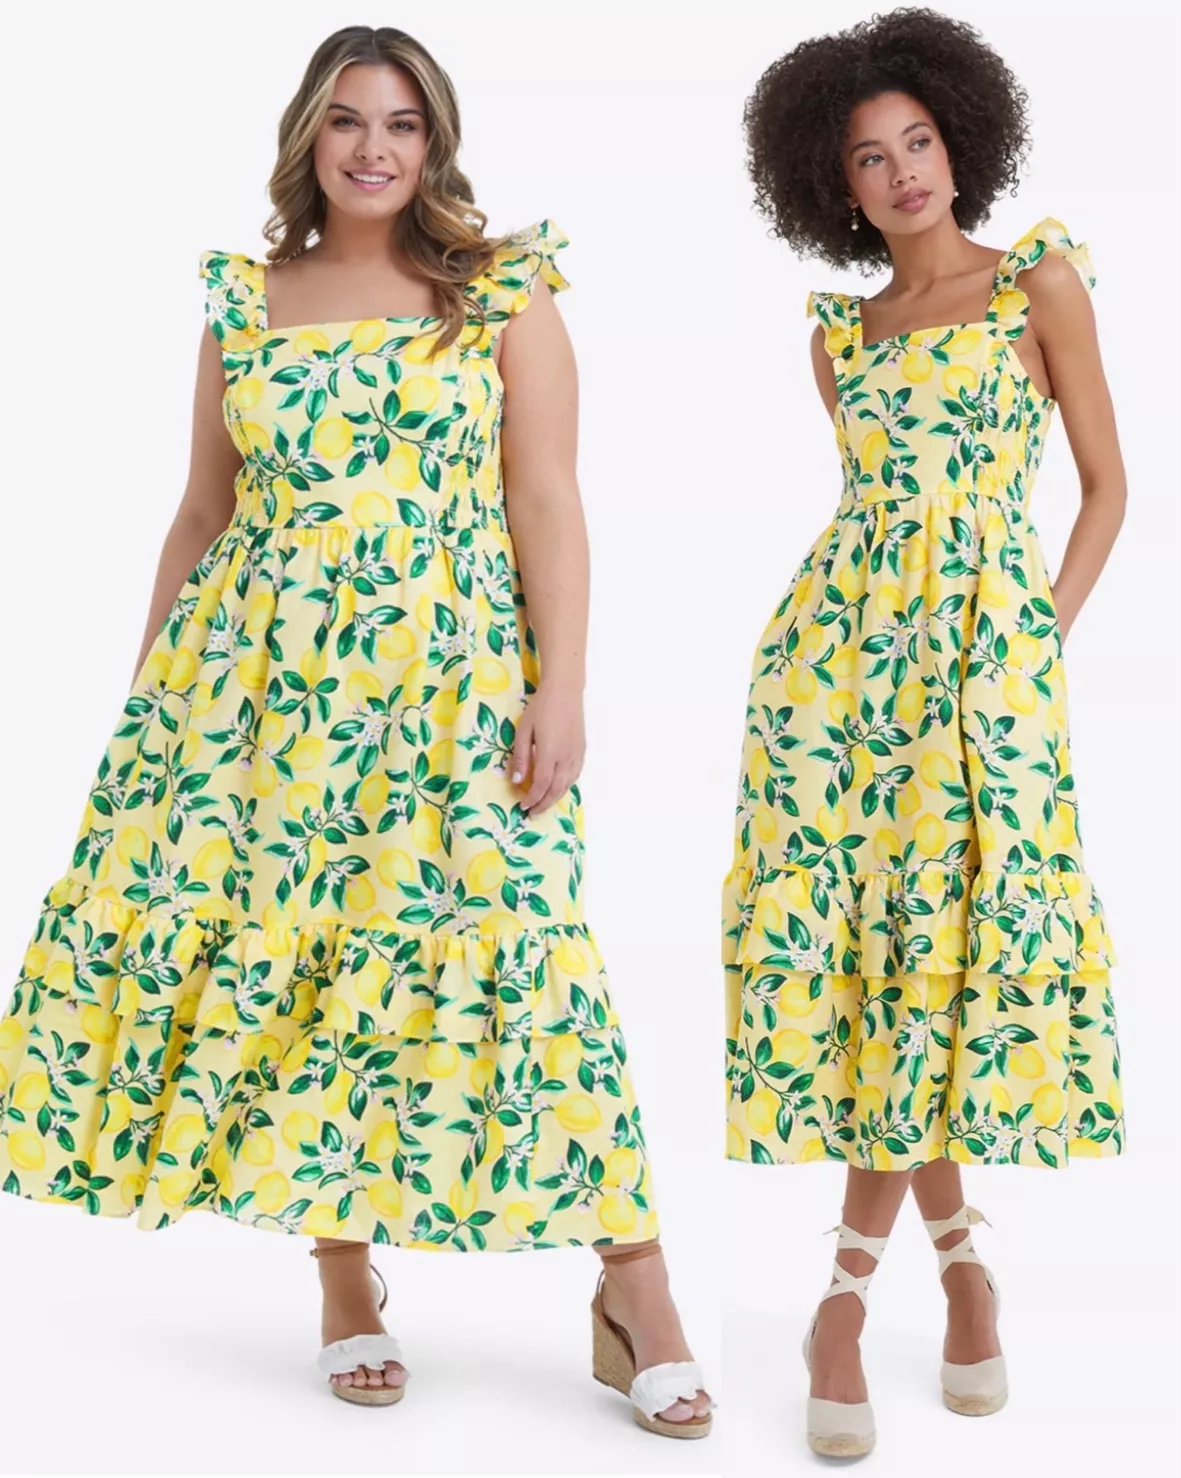 Scallop hem Dress Lemon Print Top Striped Ruffle Sleeve Dress